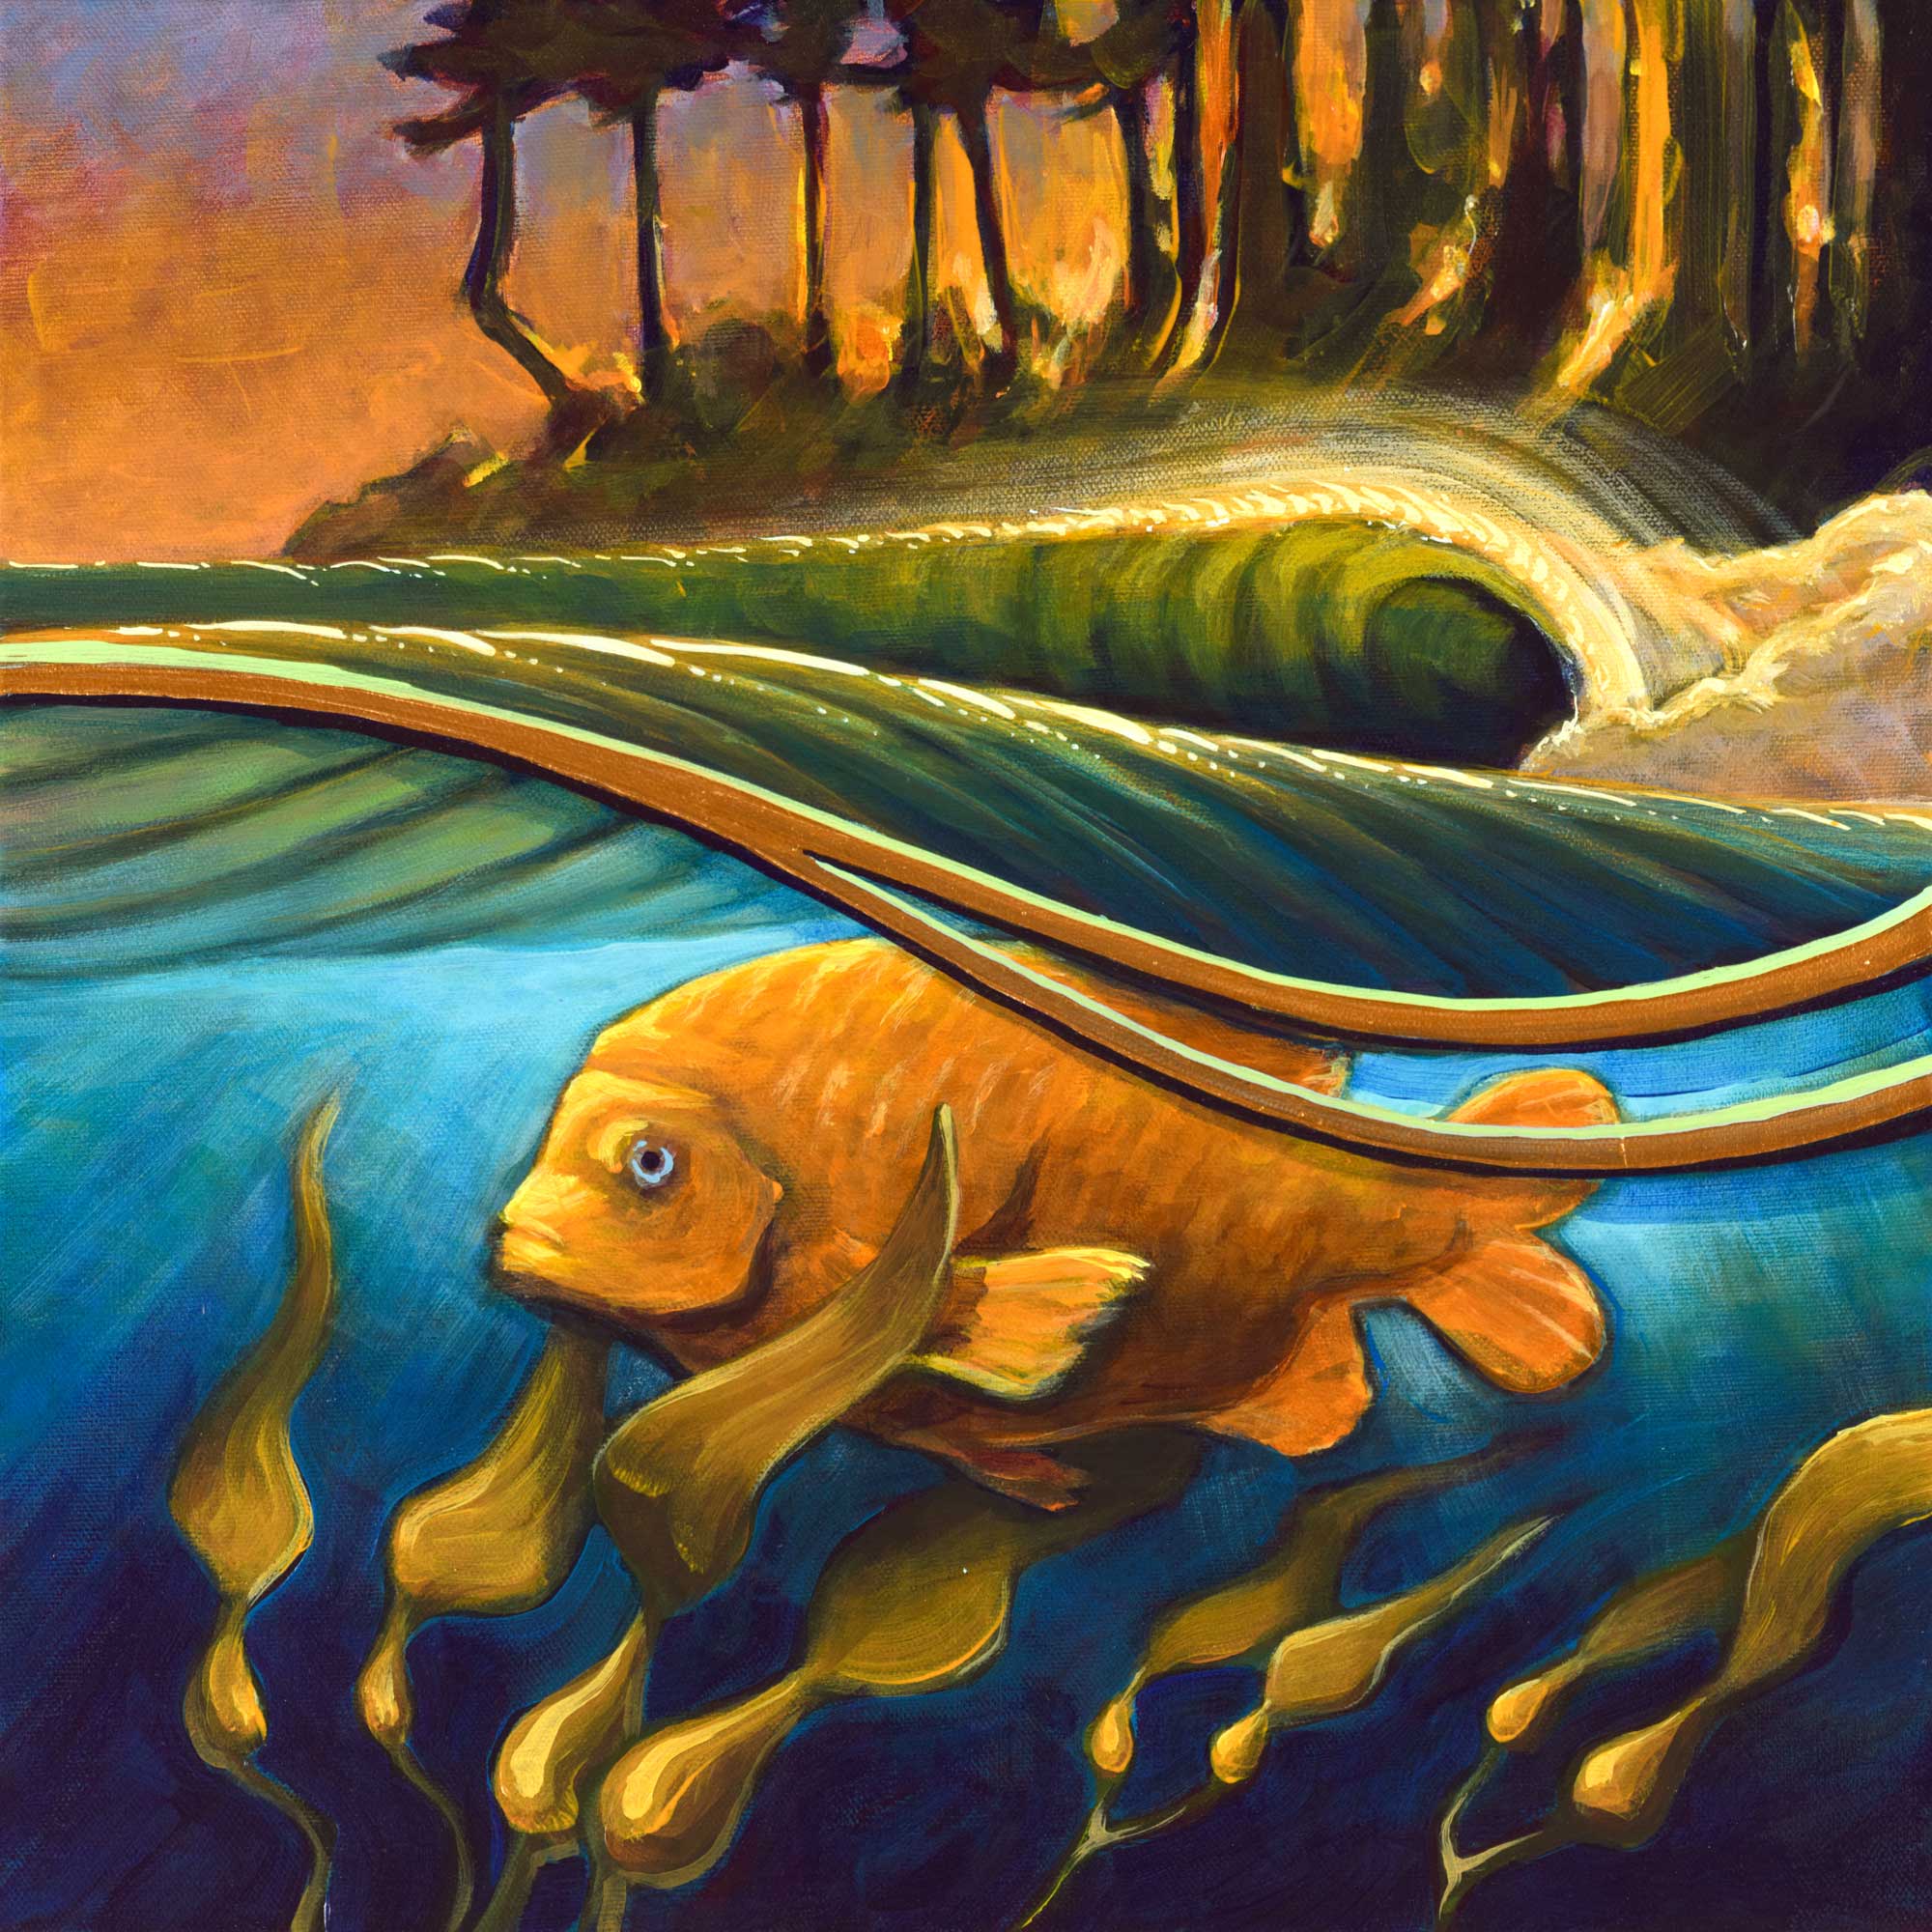 Painting of a garibaldi fish